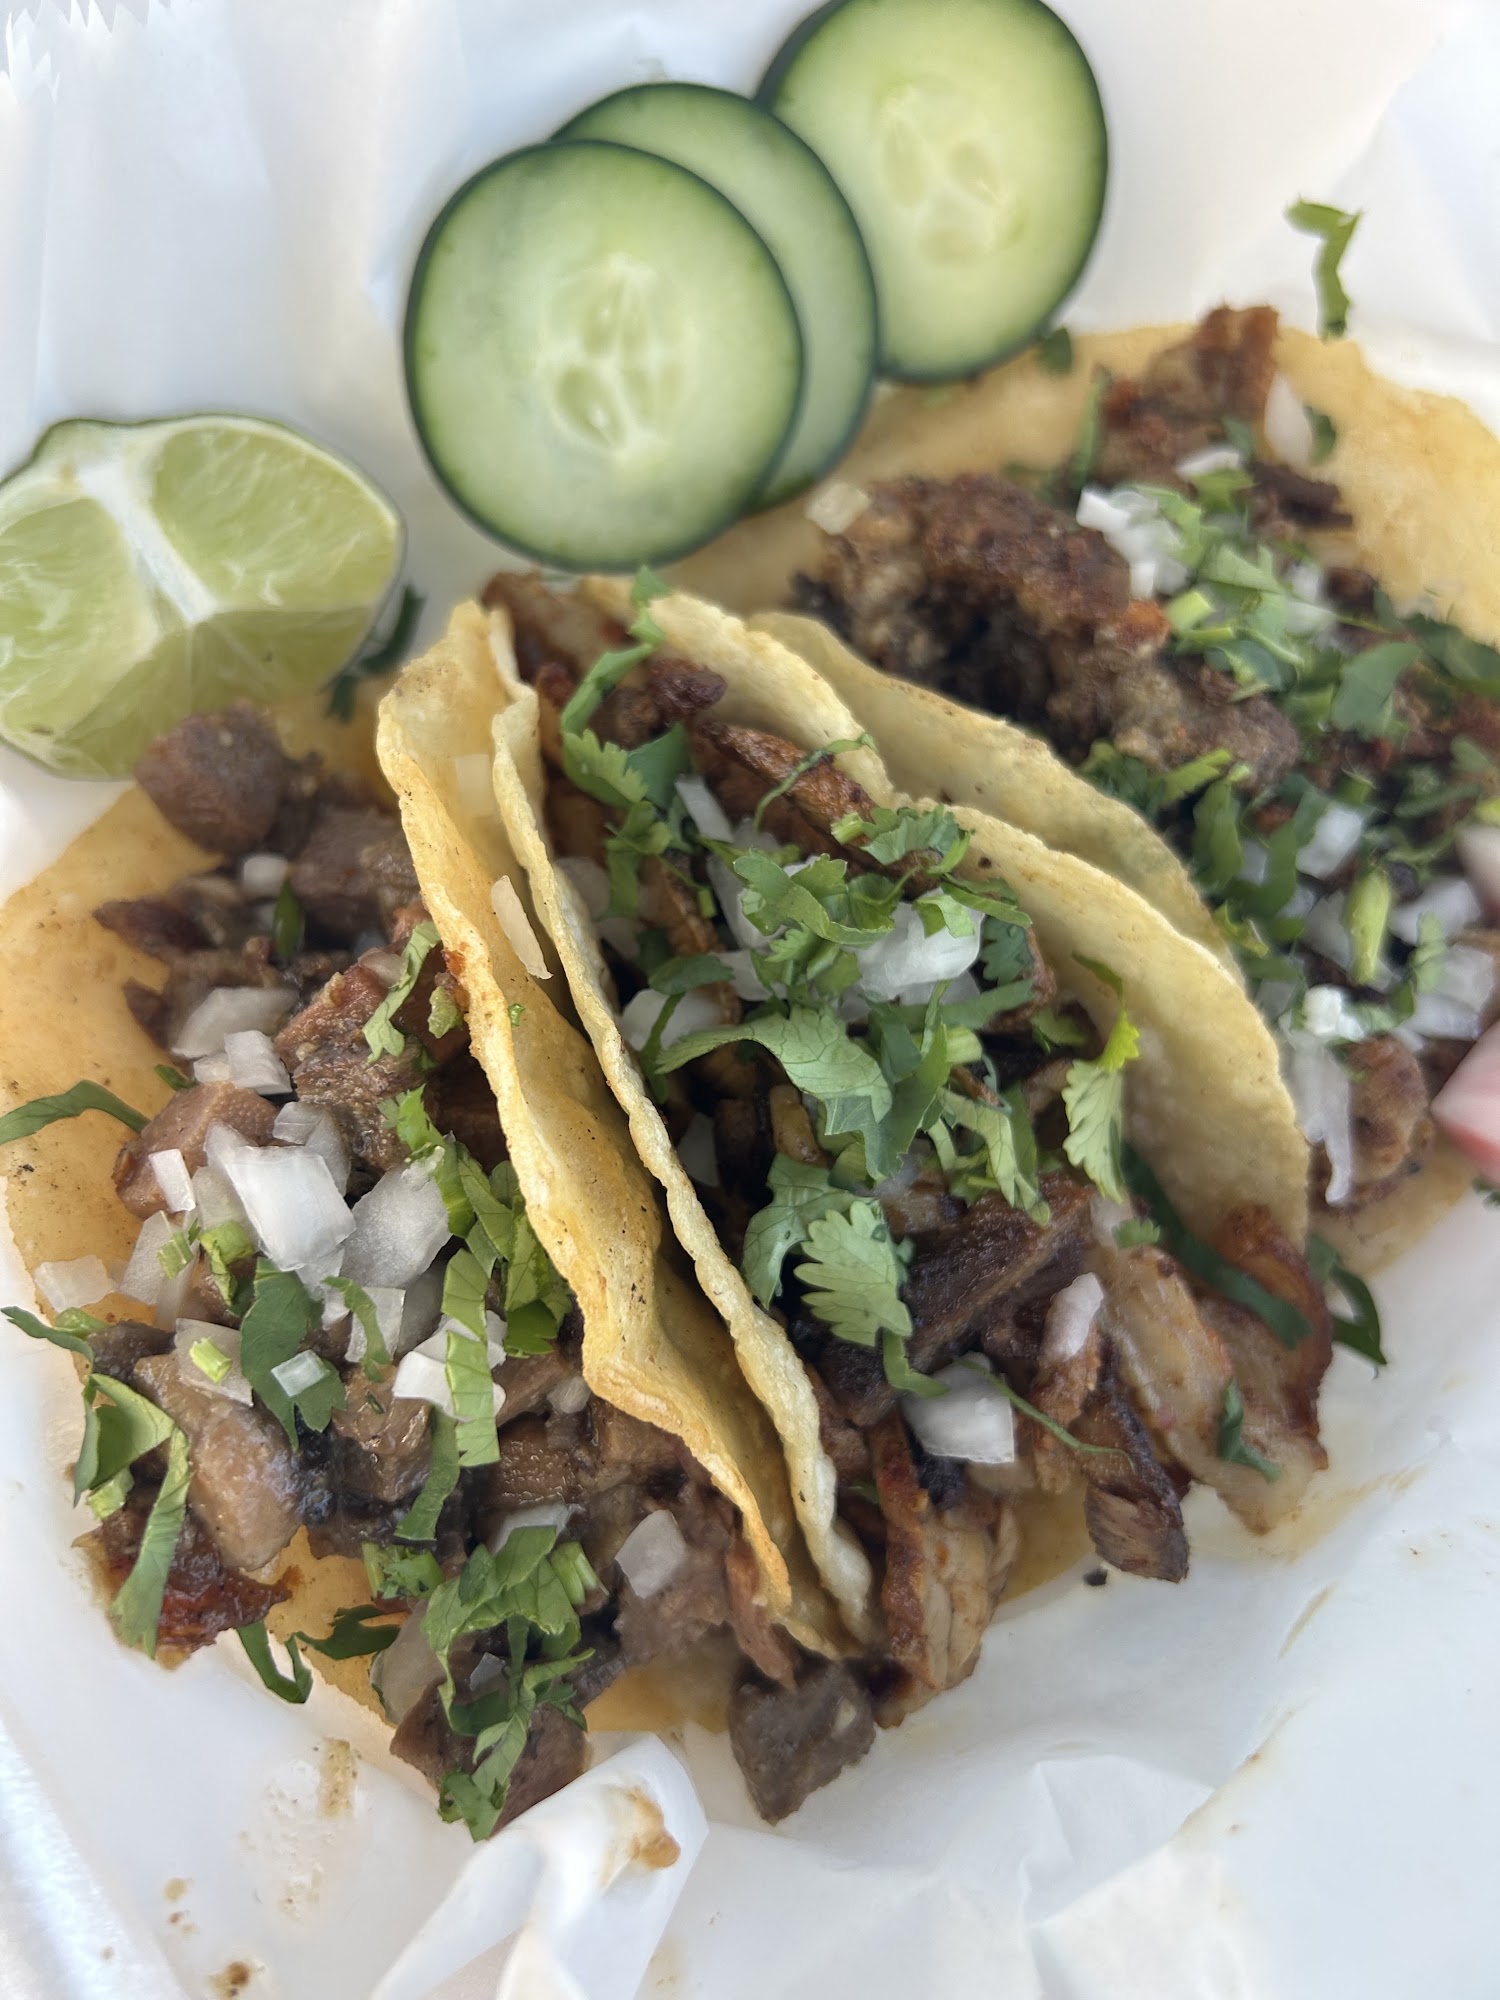 Tacos Tijuana’s